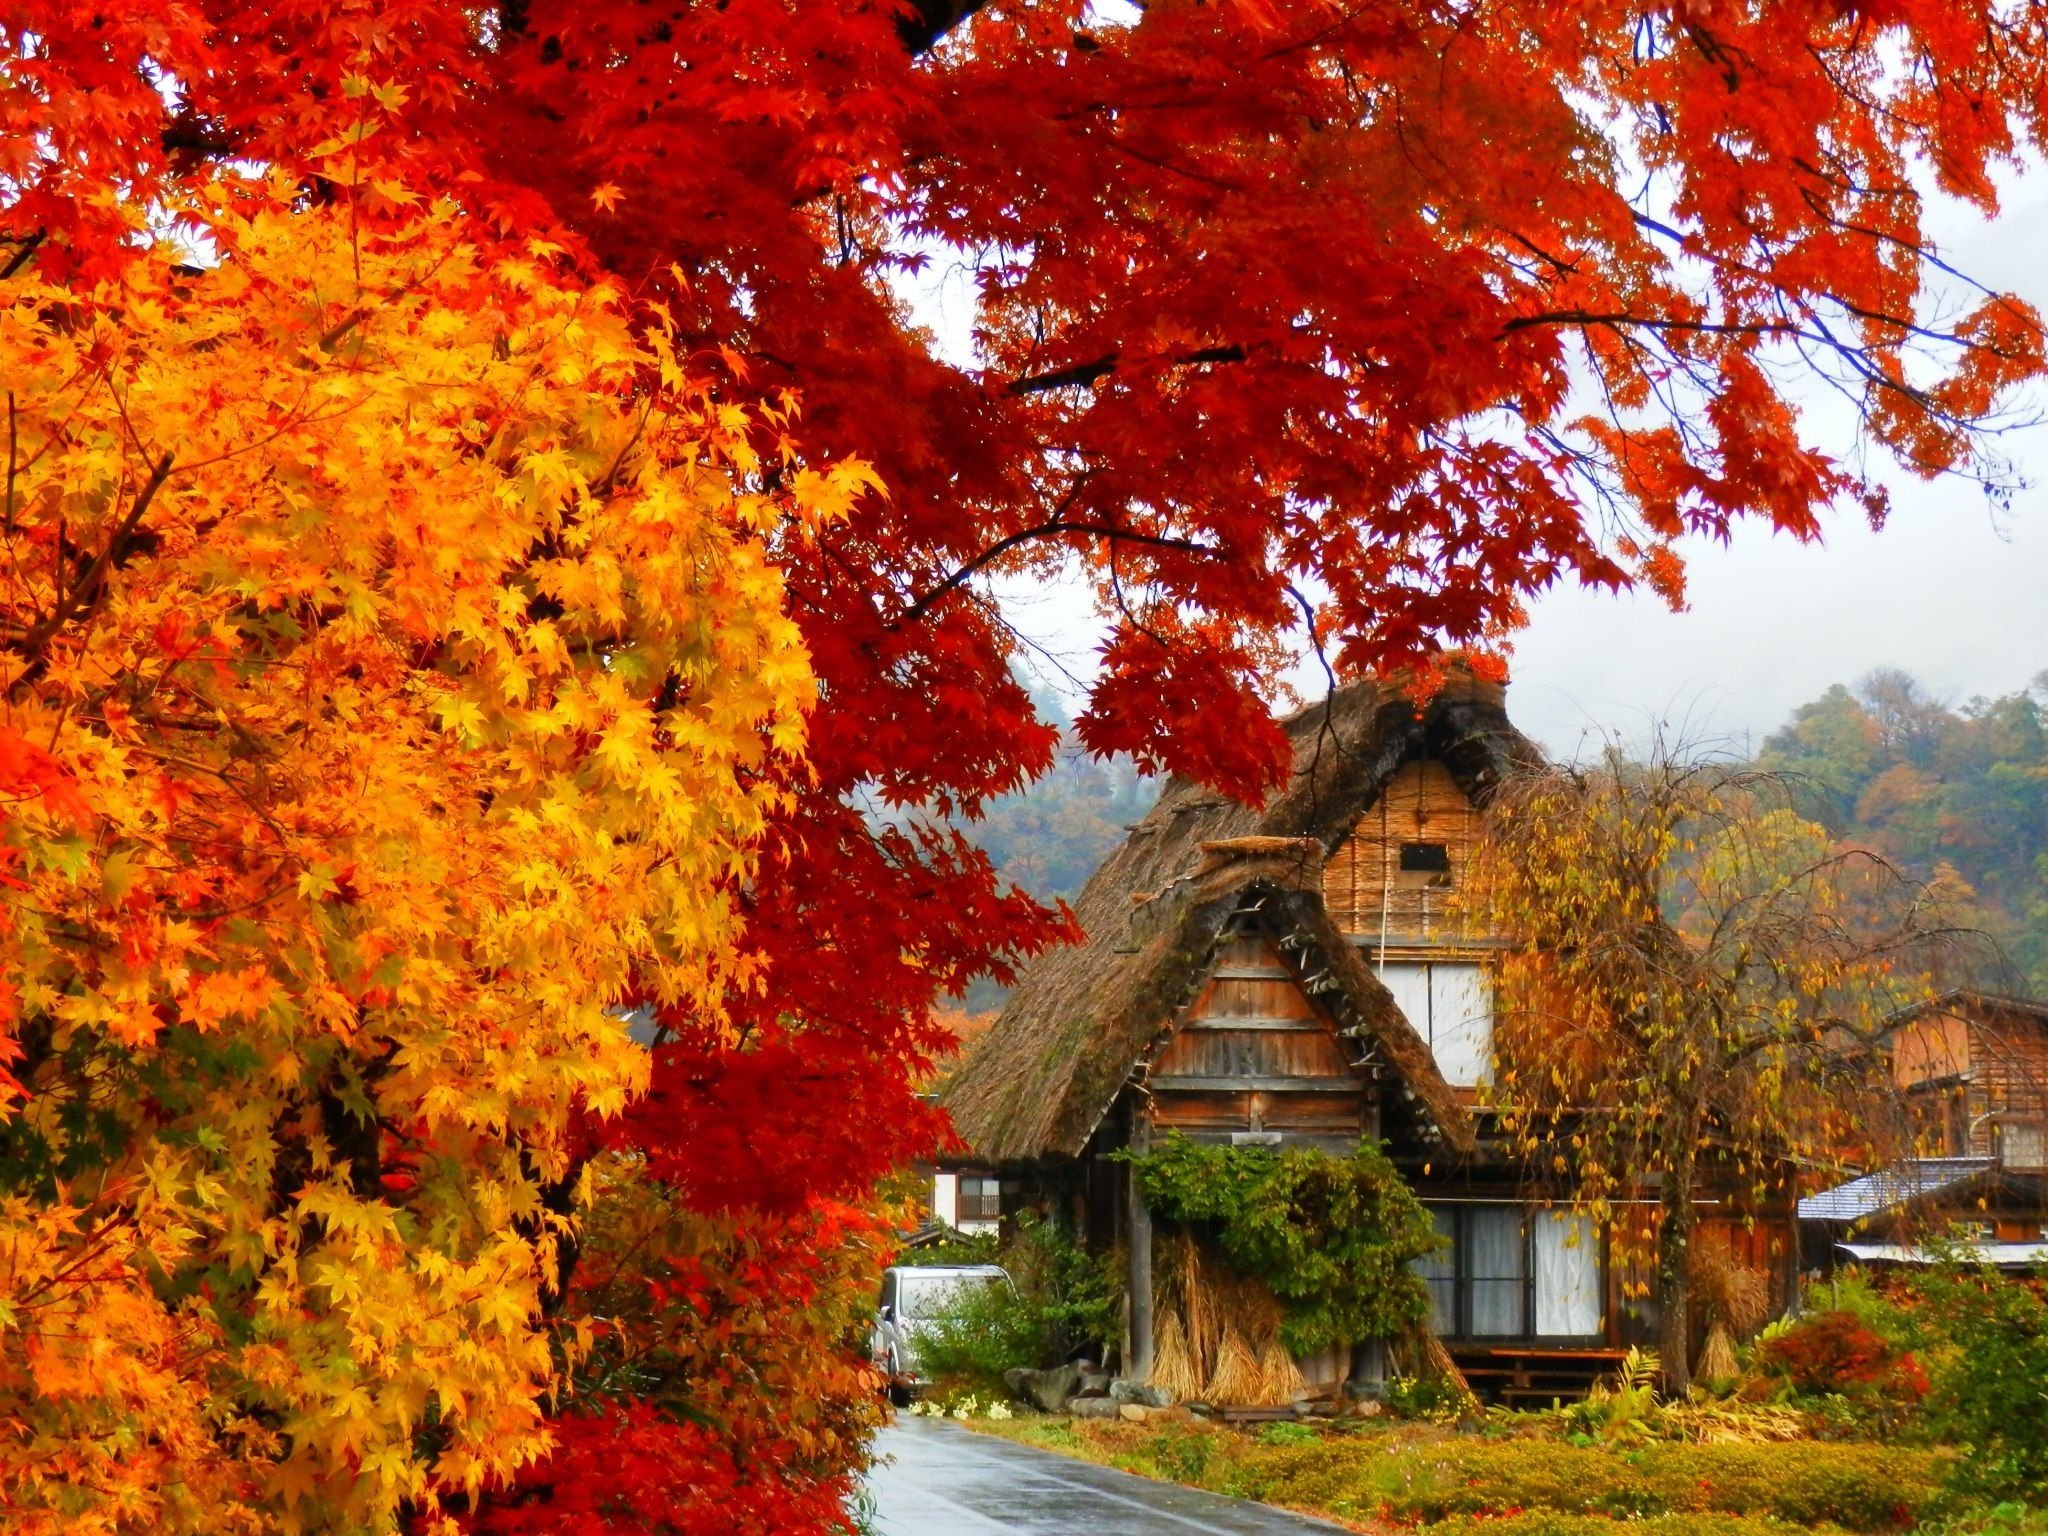 "Пейзаж с кленом" Харуки Мураками. Осень в деревне. Осенний дом. Дом осенью. Осенью очень красиво